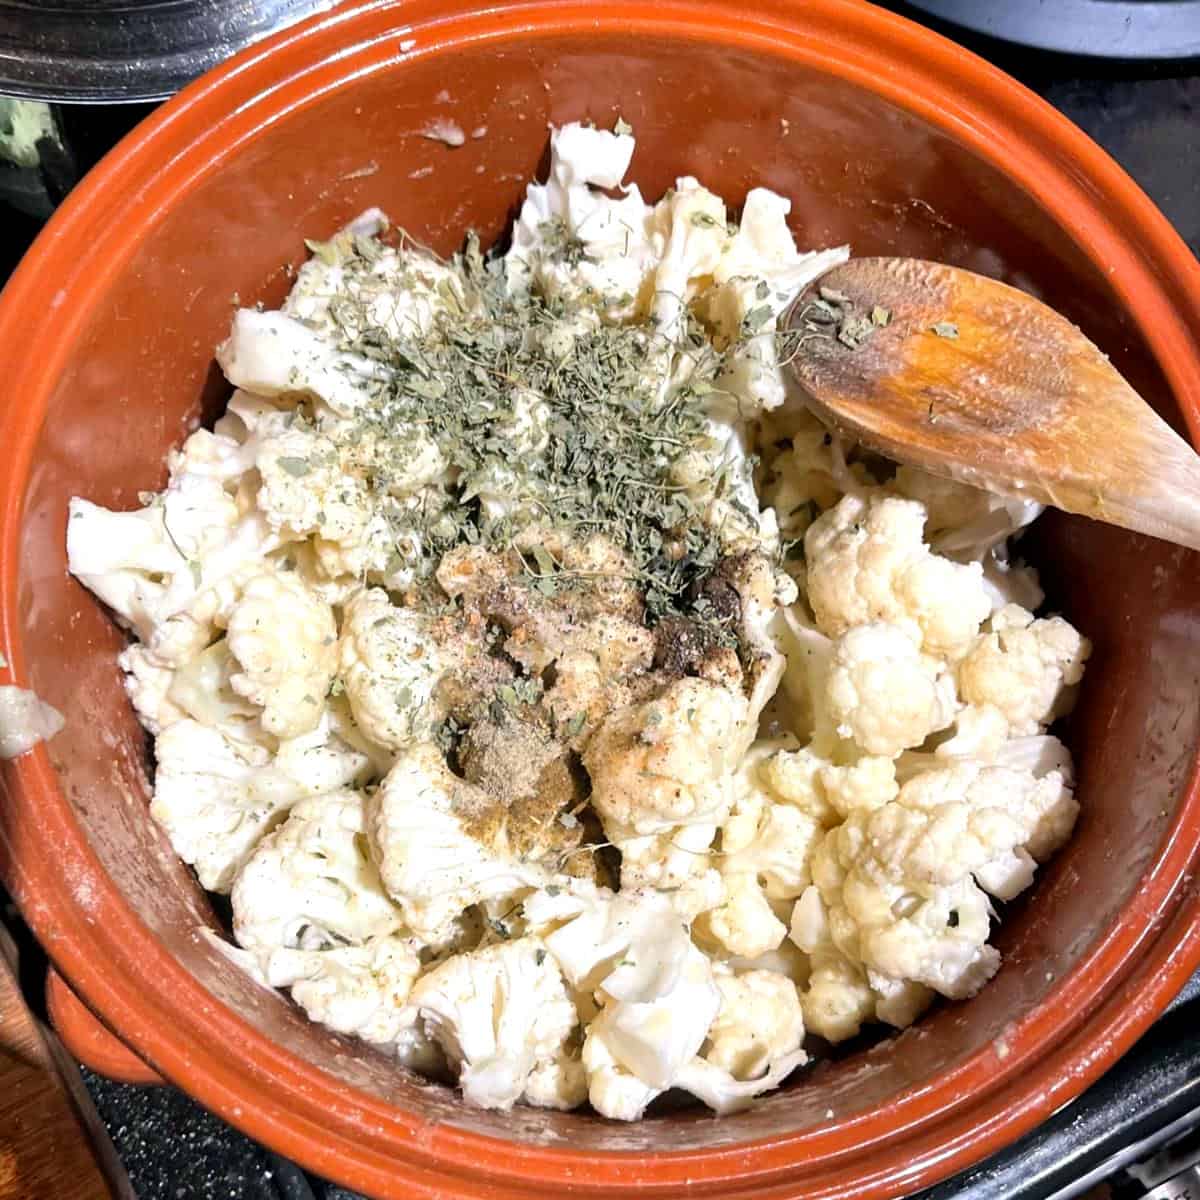 Kasoori methi, cardamom, salt, and pepper added to pot with cauliflower.